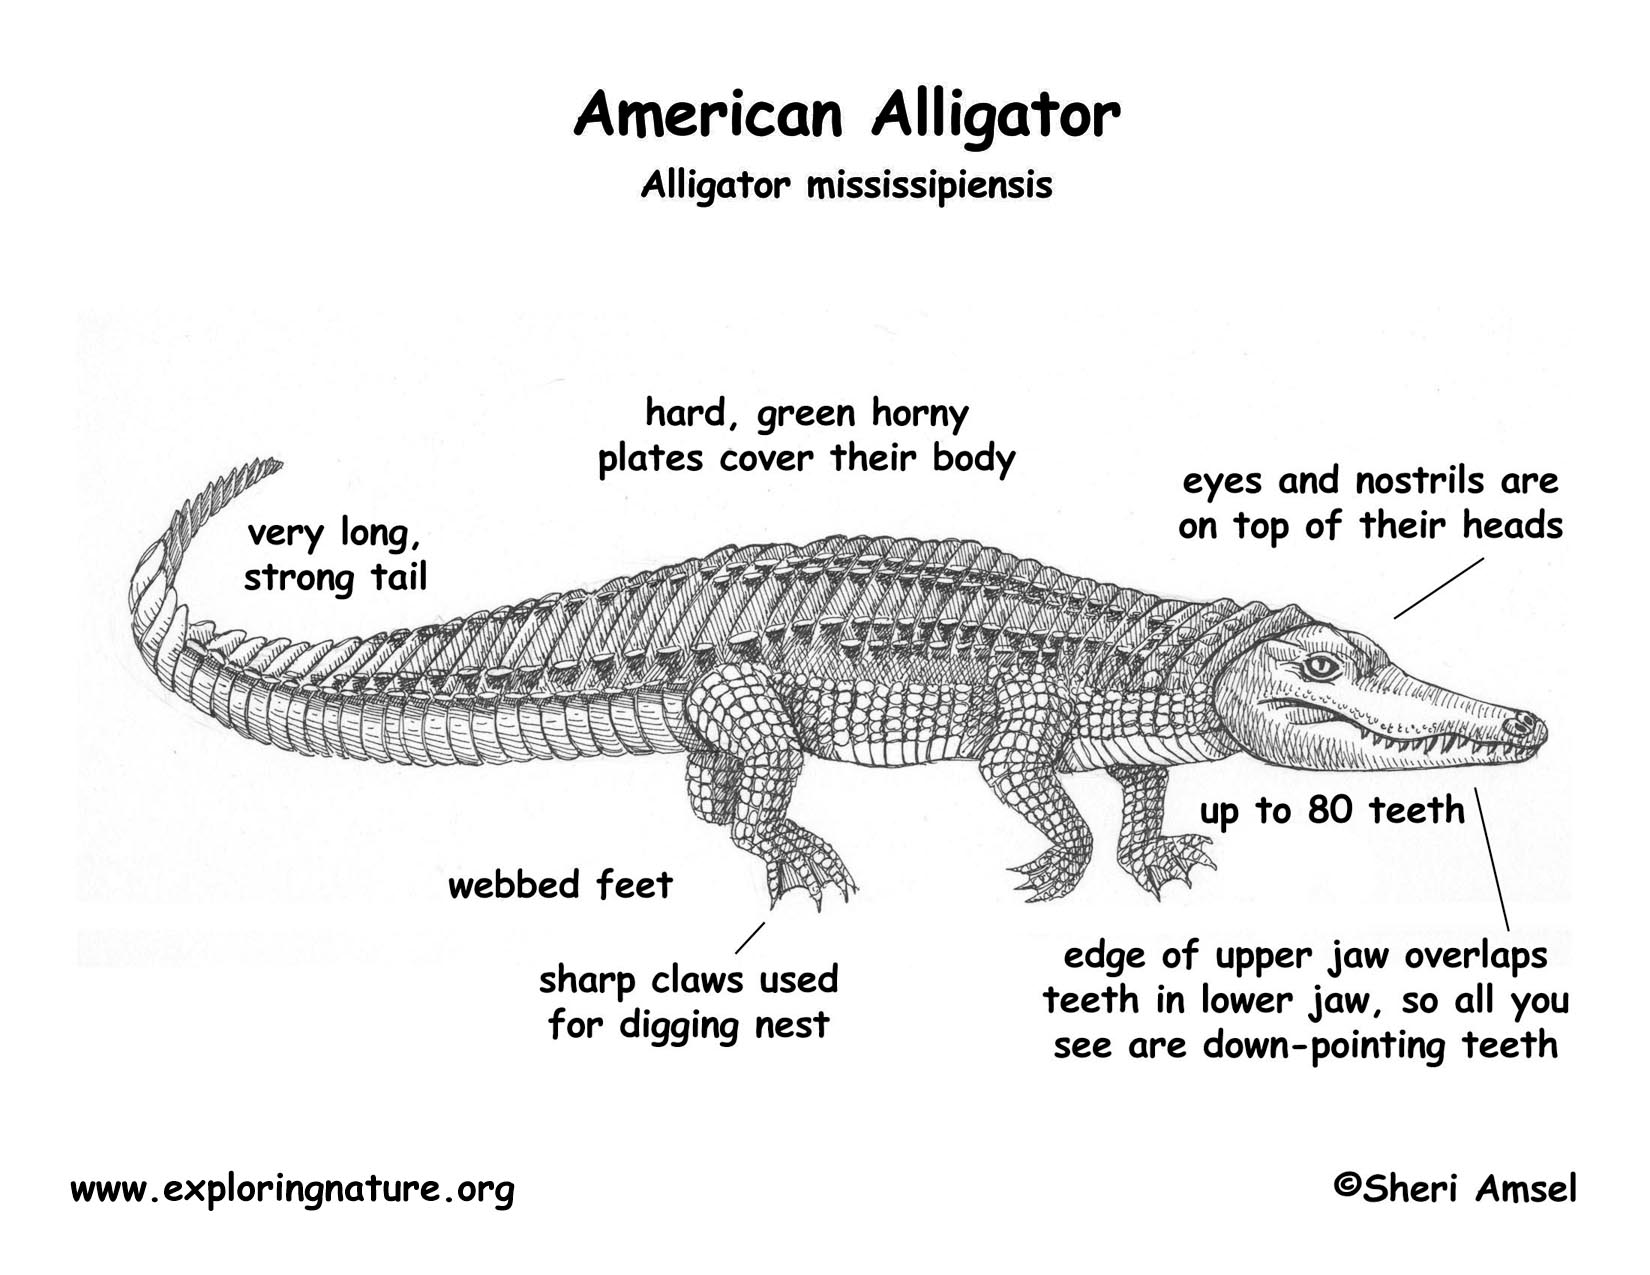 Alligator (American)